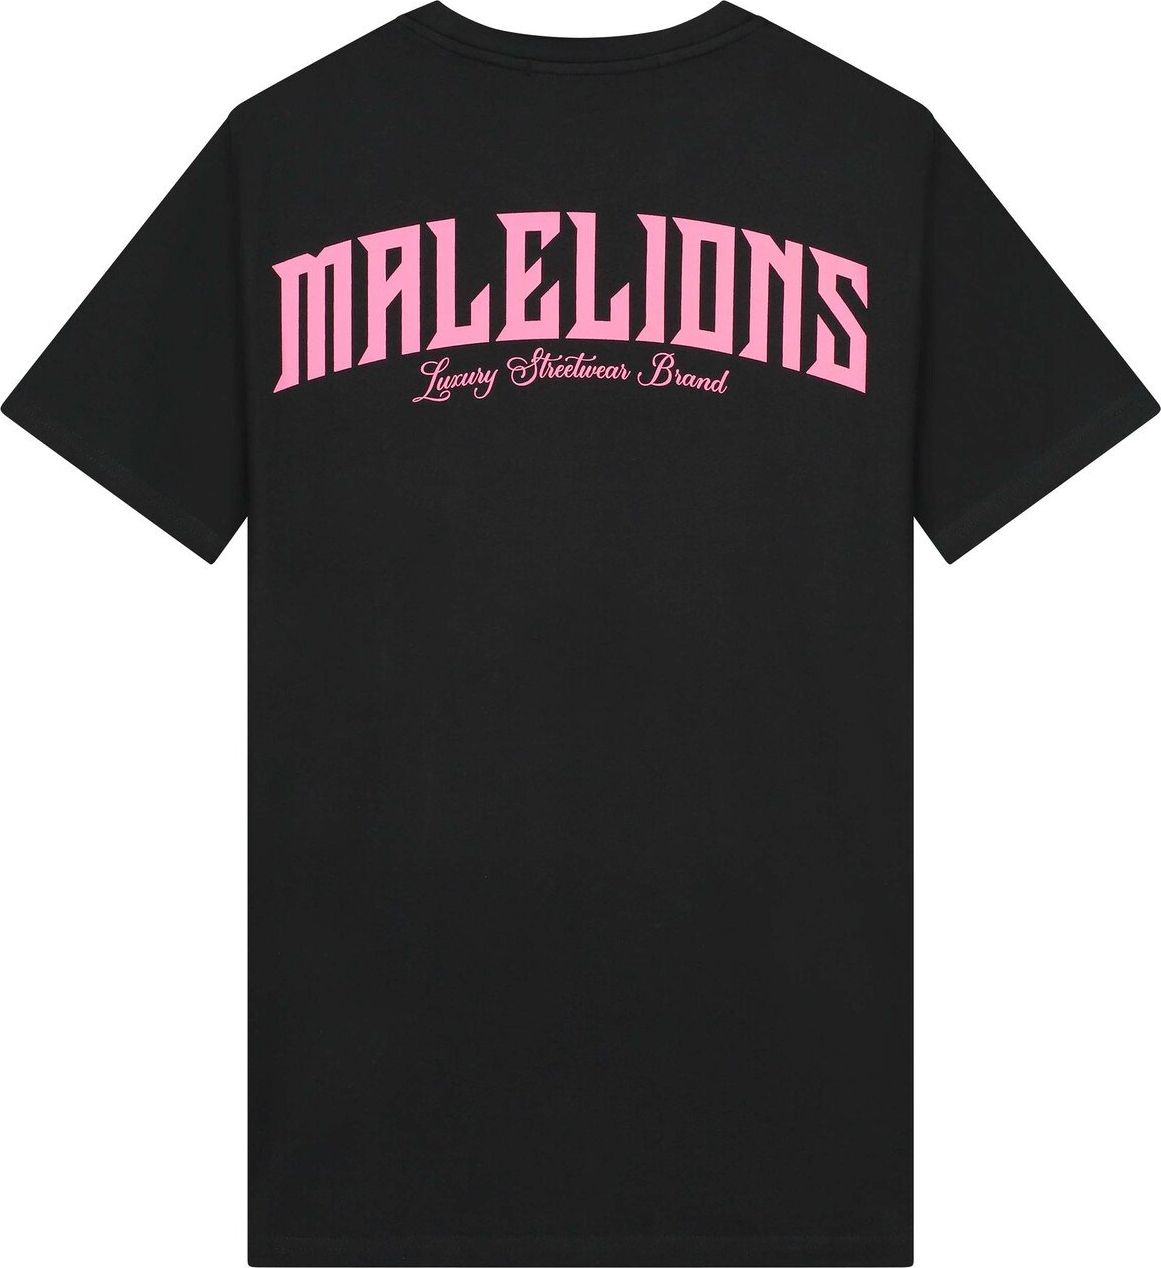 Malelions Boxer T-Shirt - Black/Fuchsia Zwart